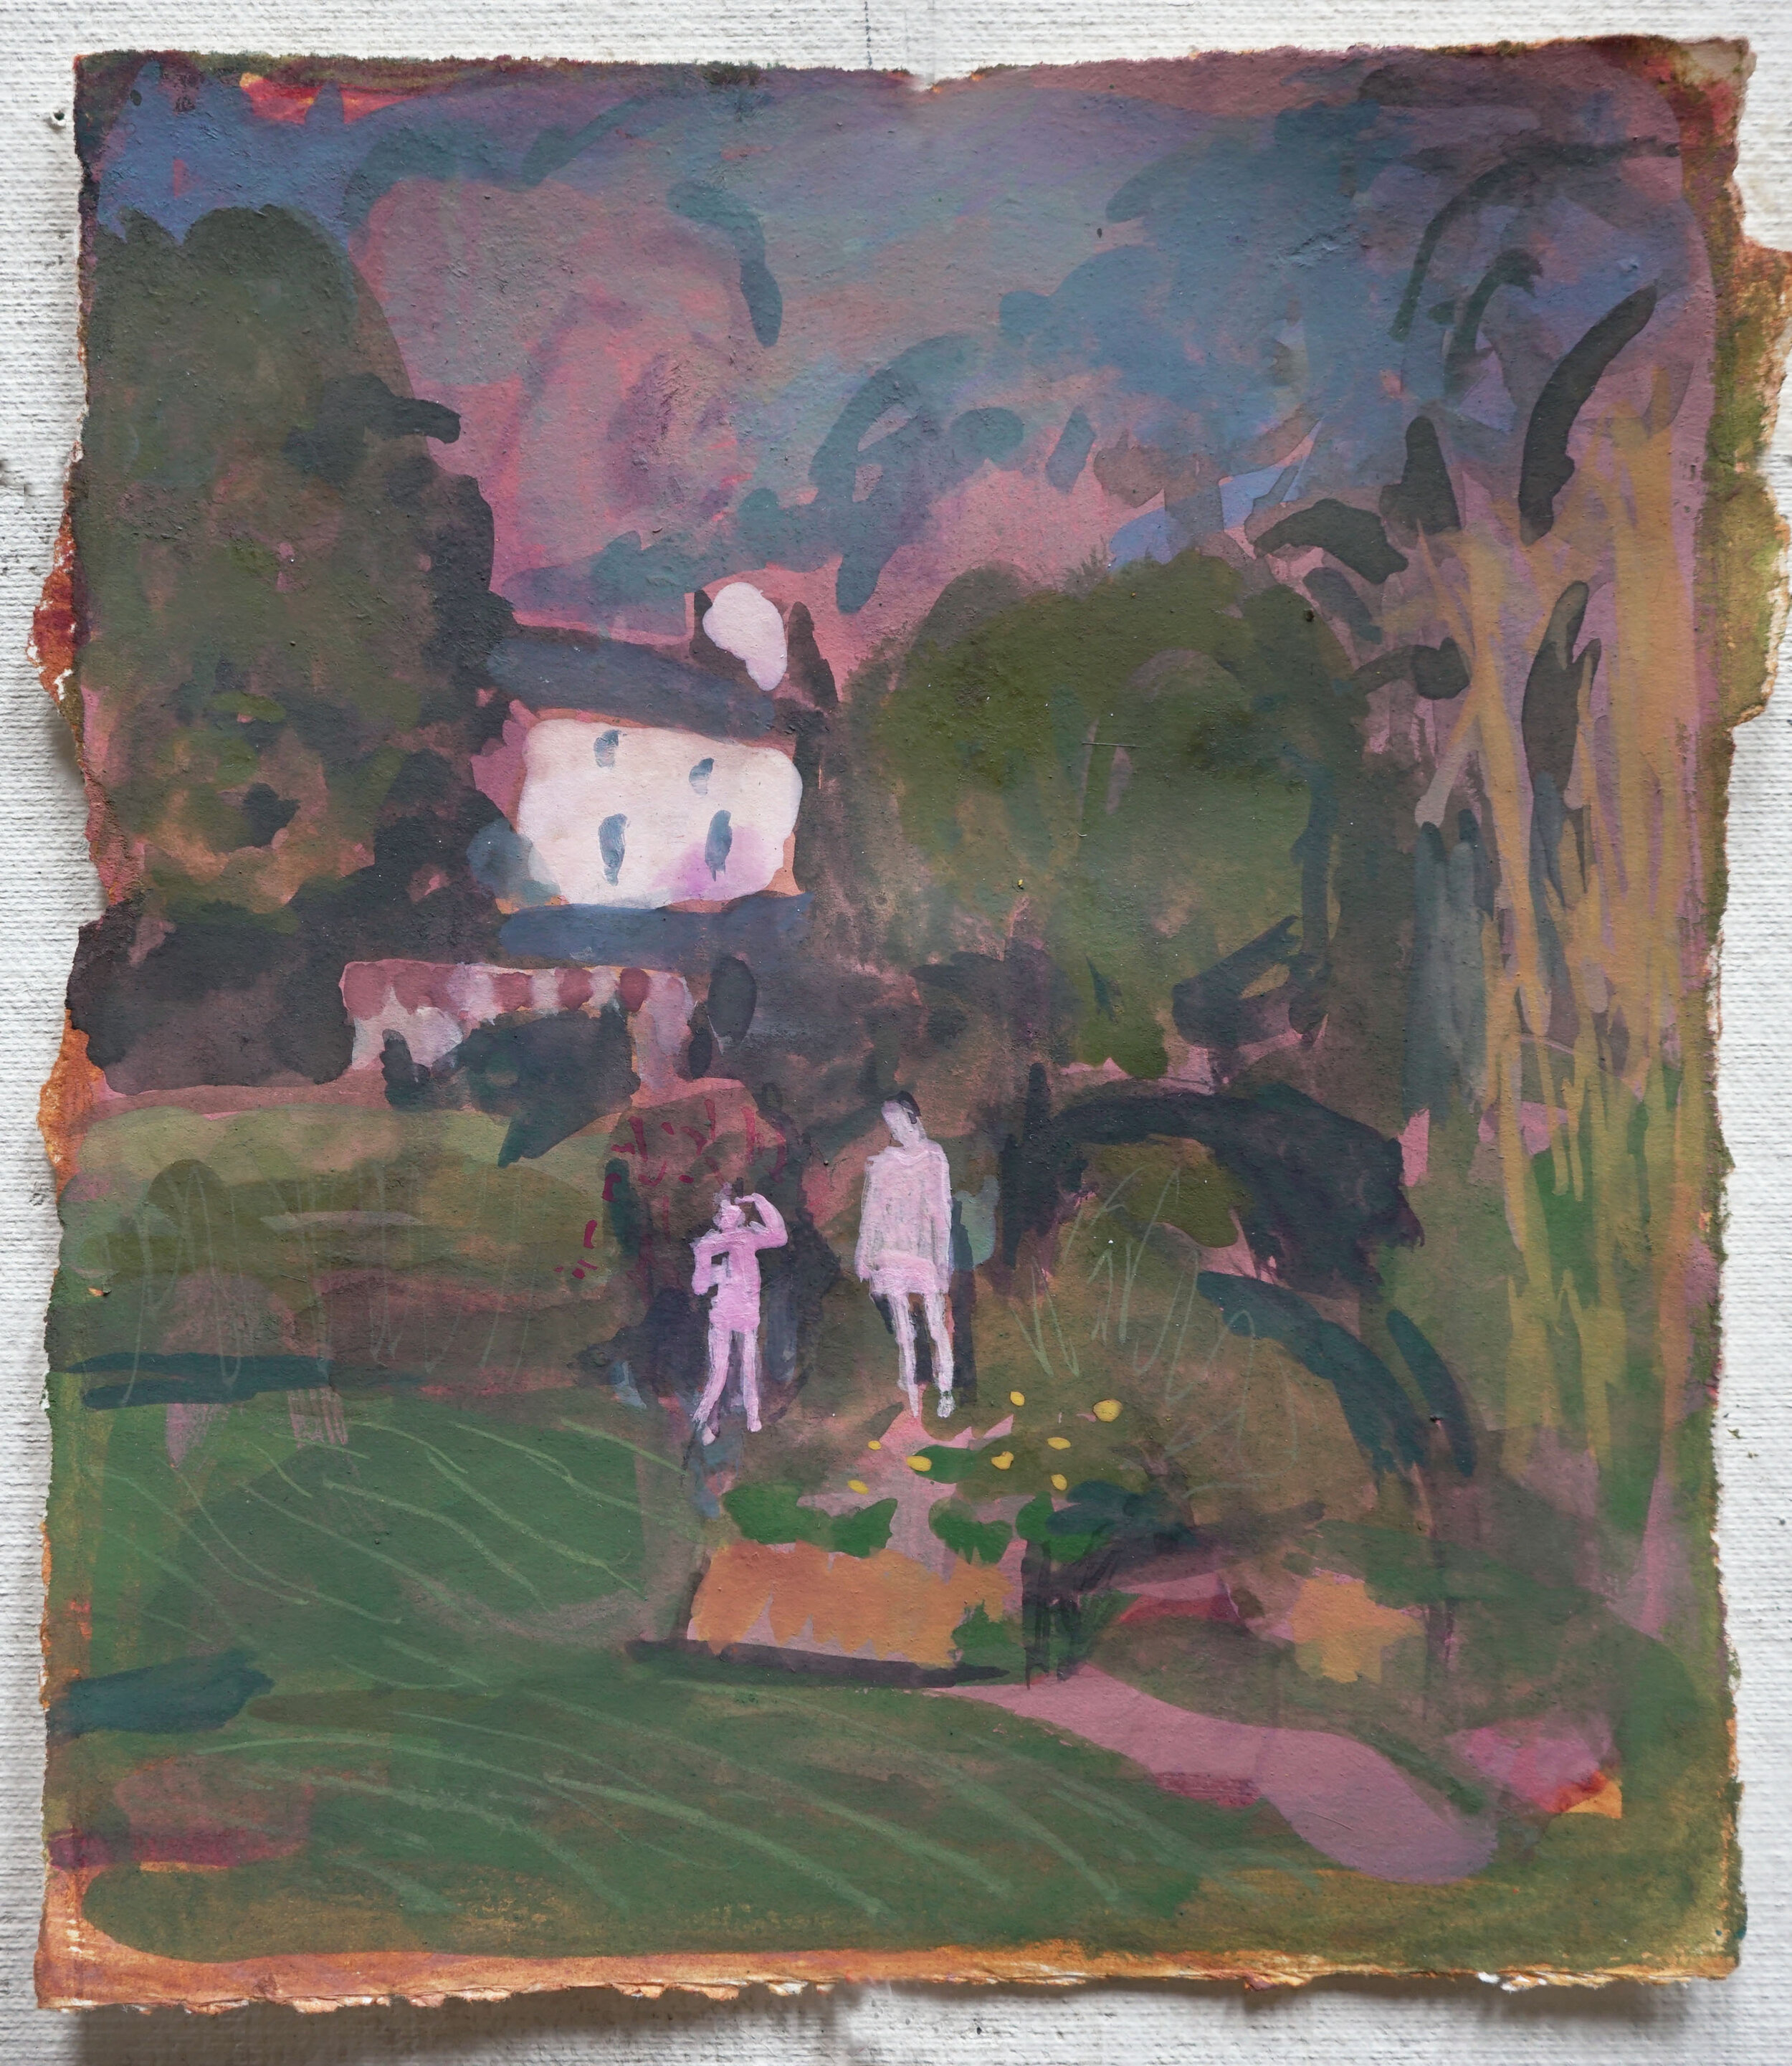 Garden Buddies, 8.25" x 7.25", Gouache and Ink on Paper, 2020